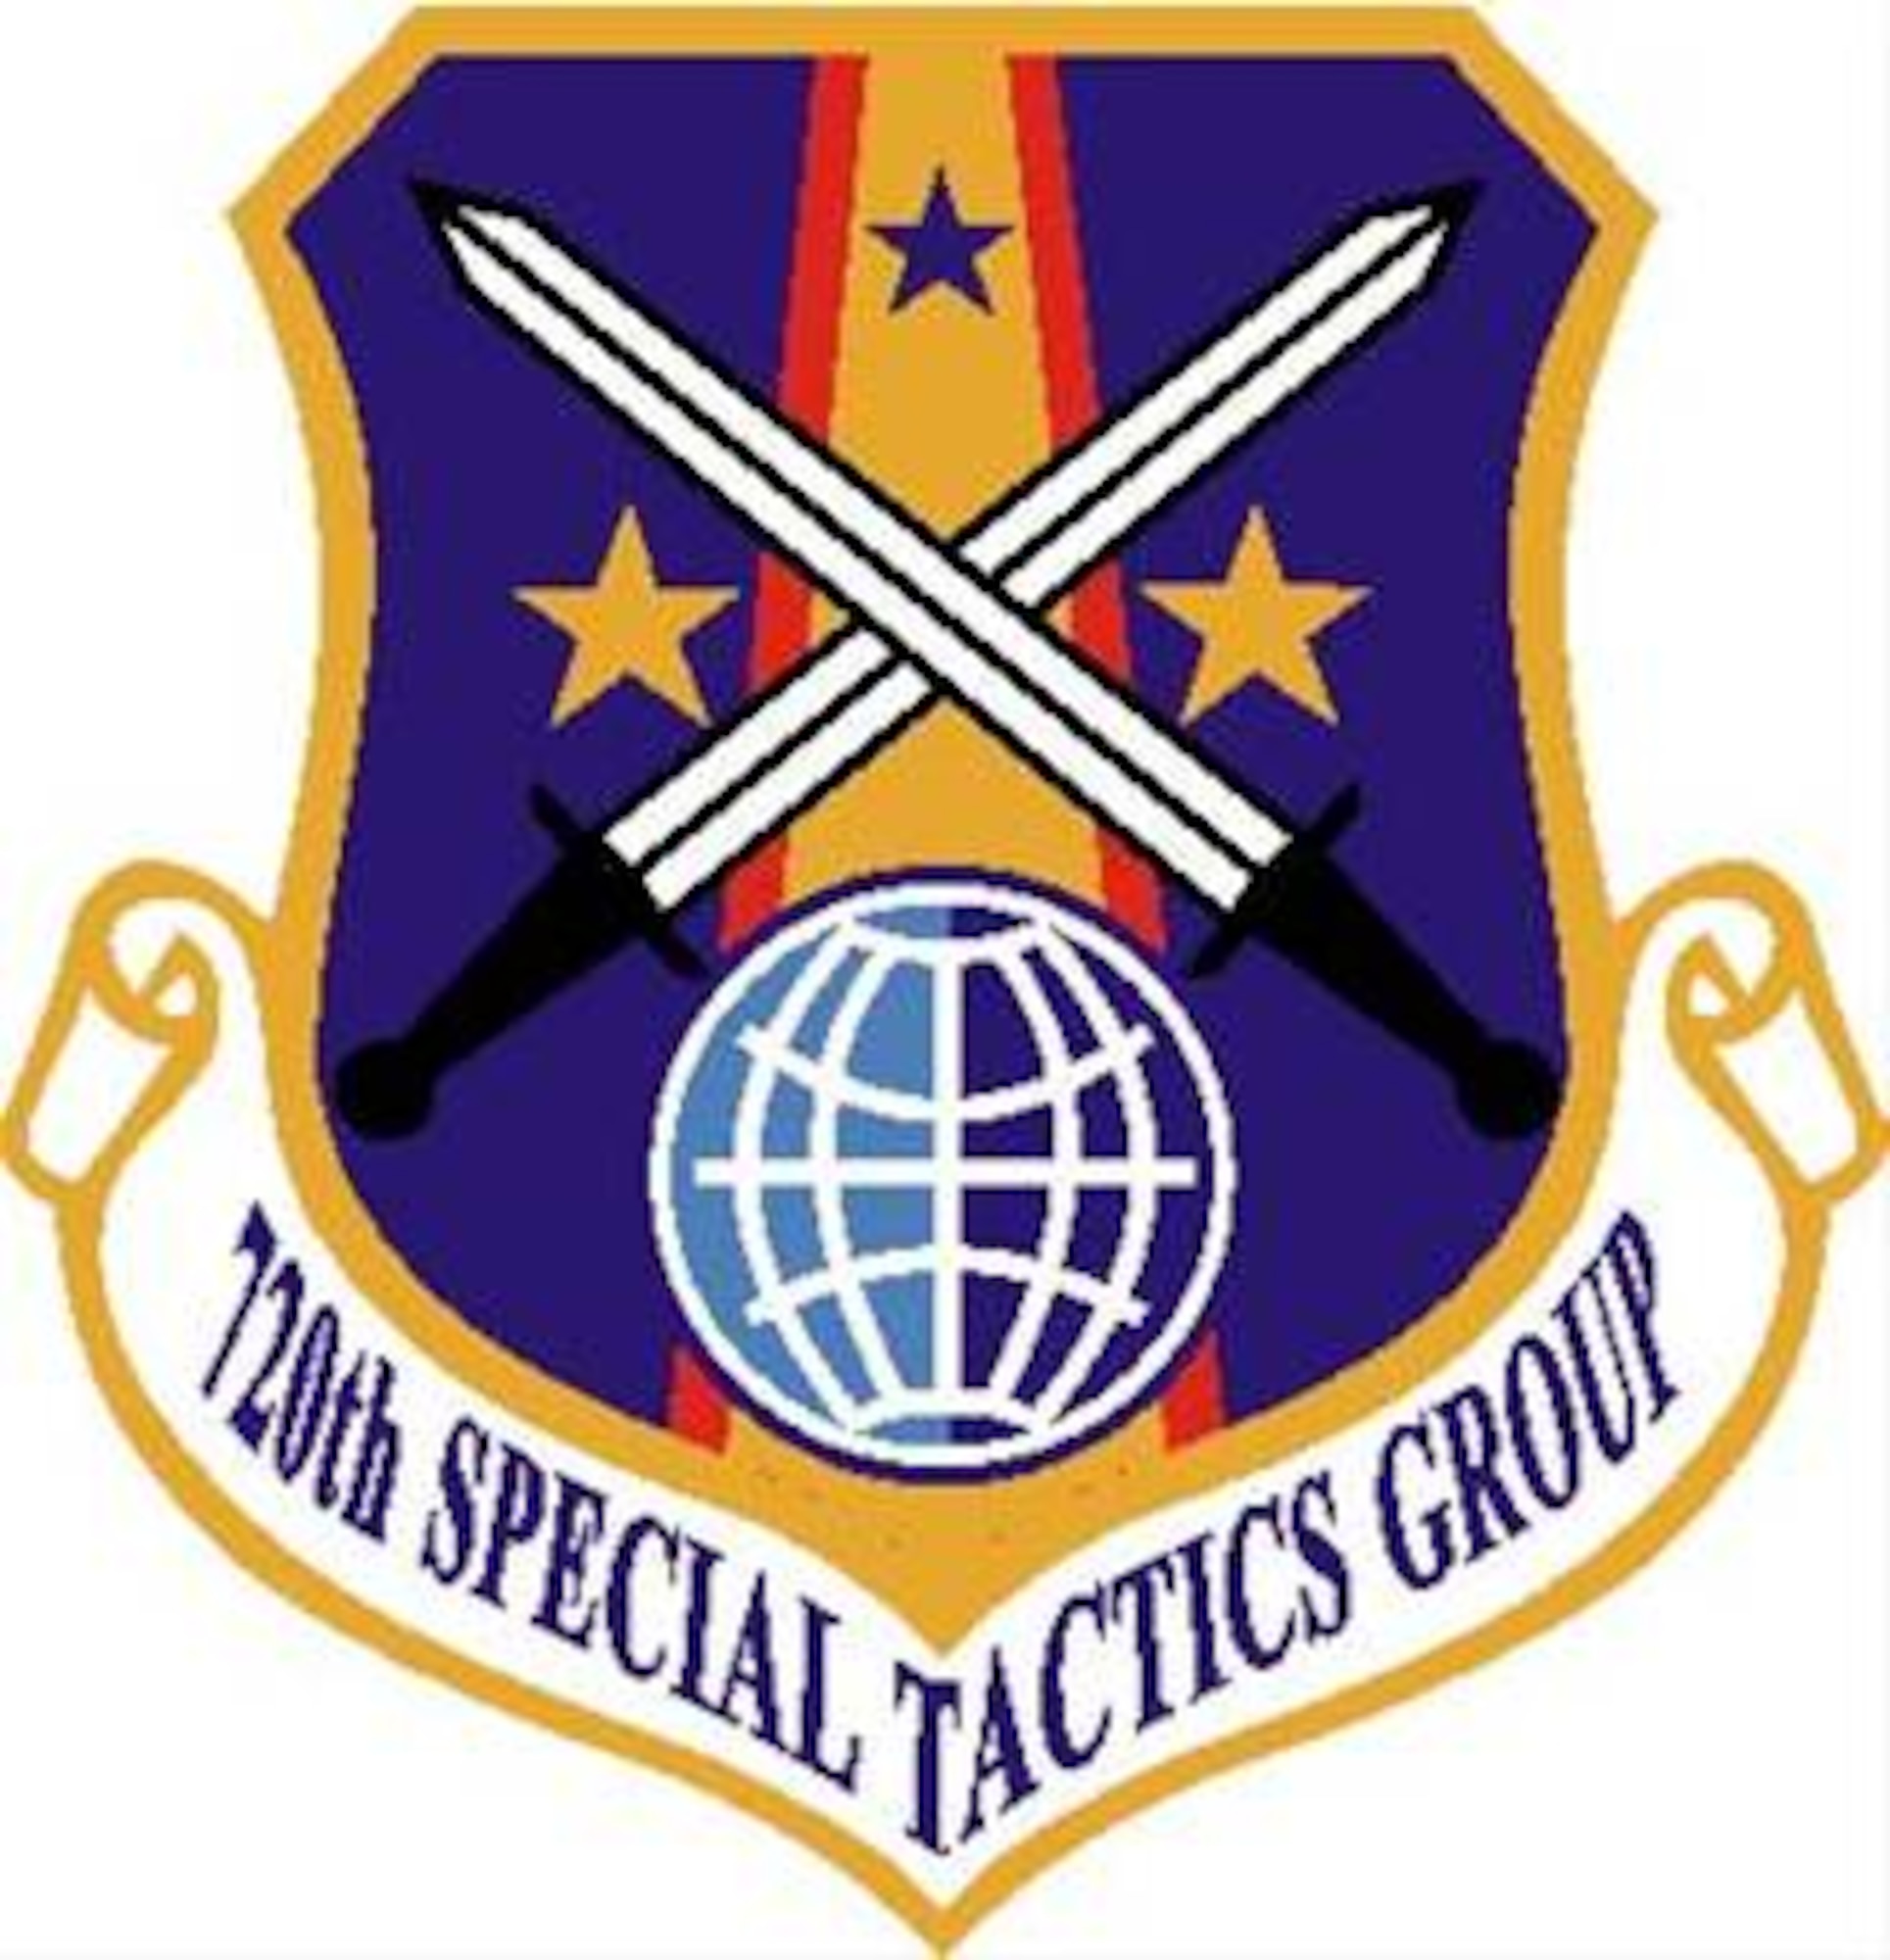 720th Special Tactics Group > Hurlburt Field > Hurlburt Field Fact 